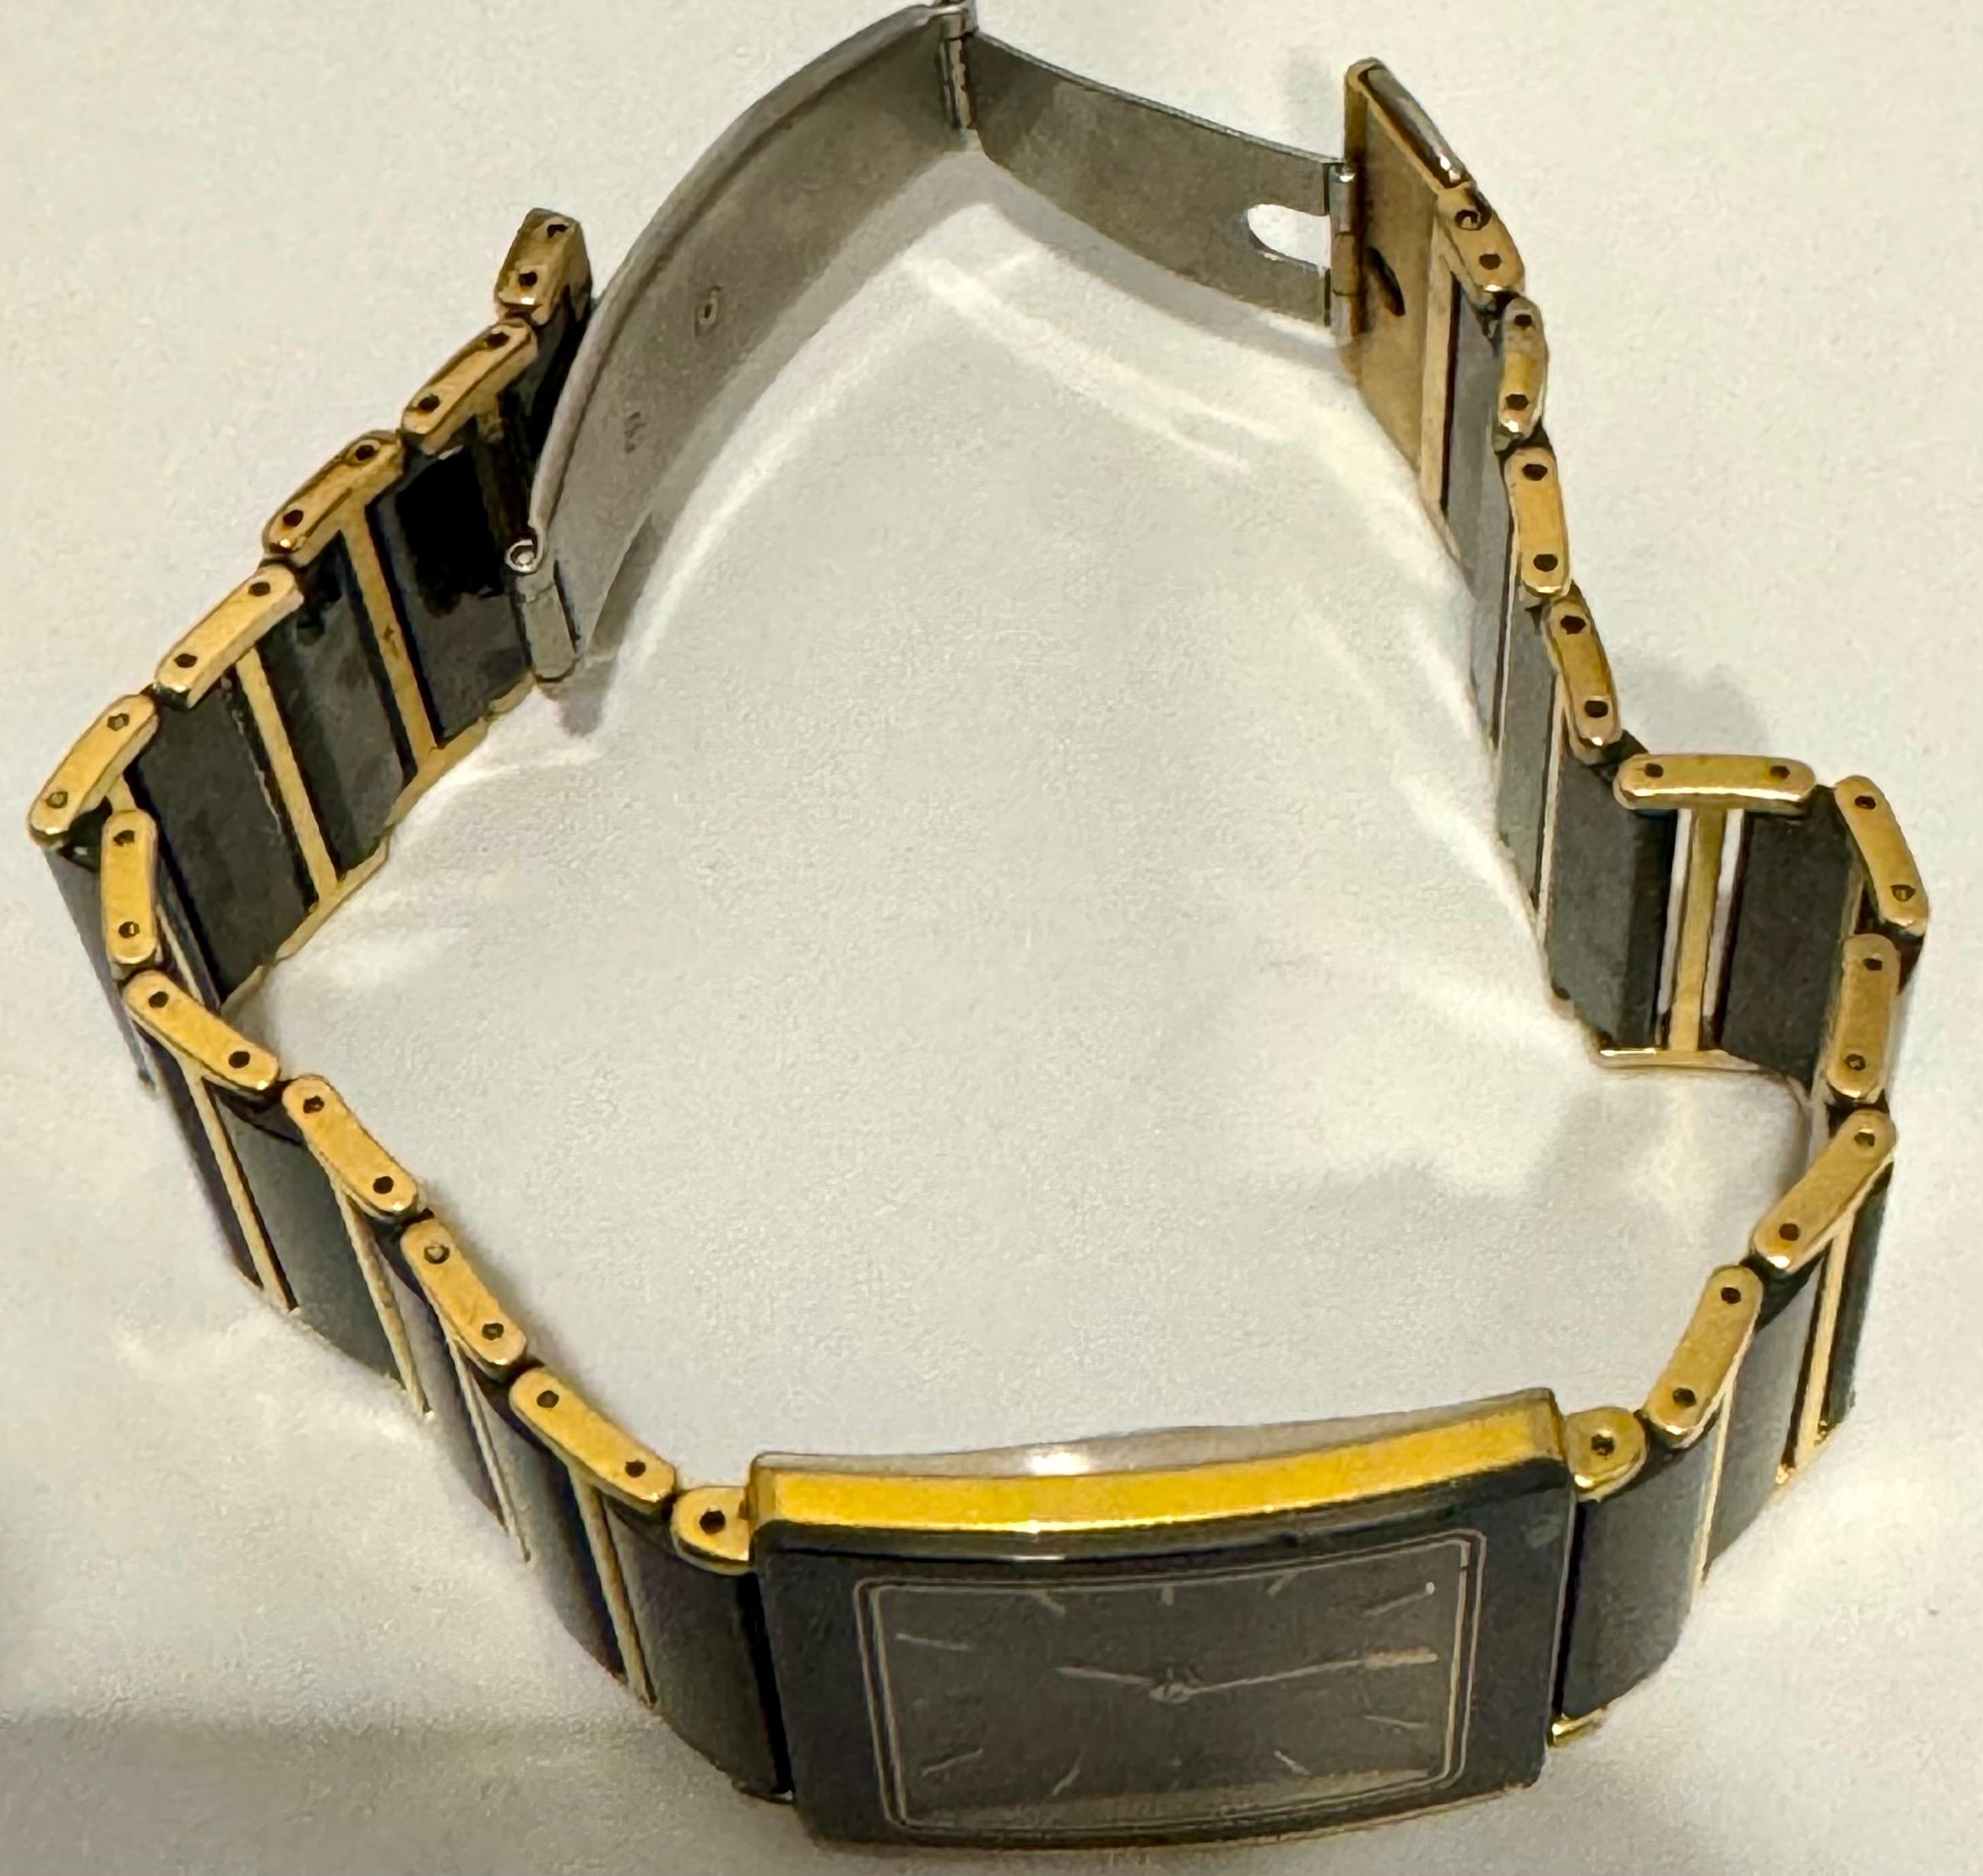 Rado DIRSTAR S bracelet watch - scratch proof, water sealed, high tech ceramics. For Sale 6